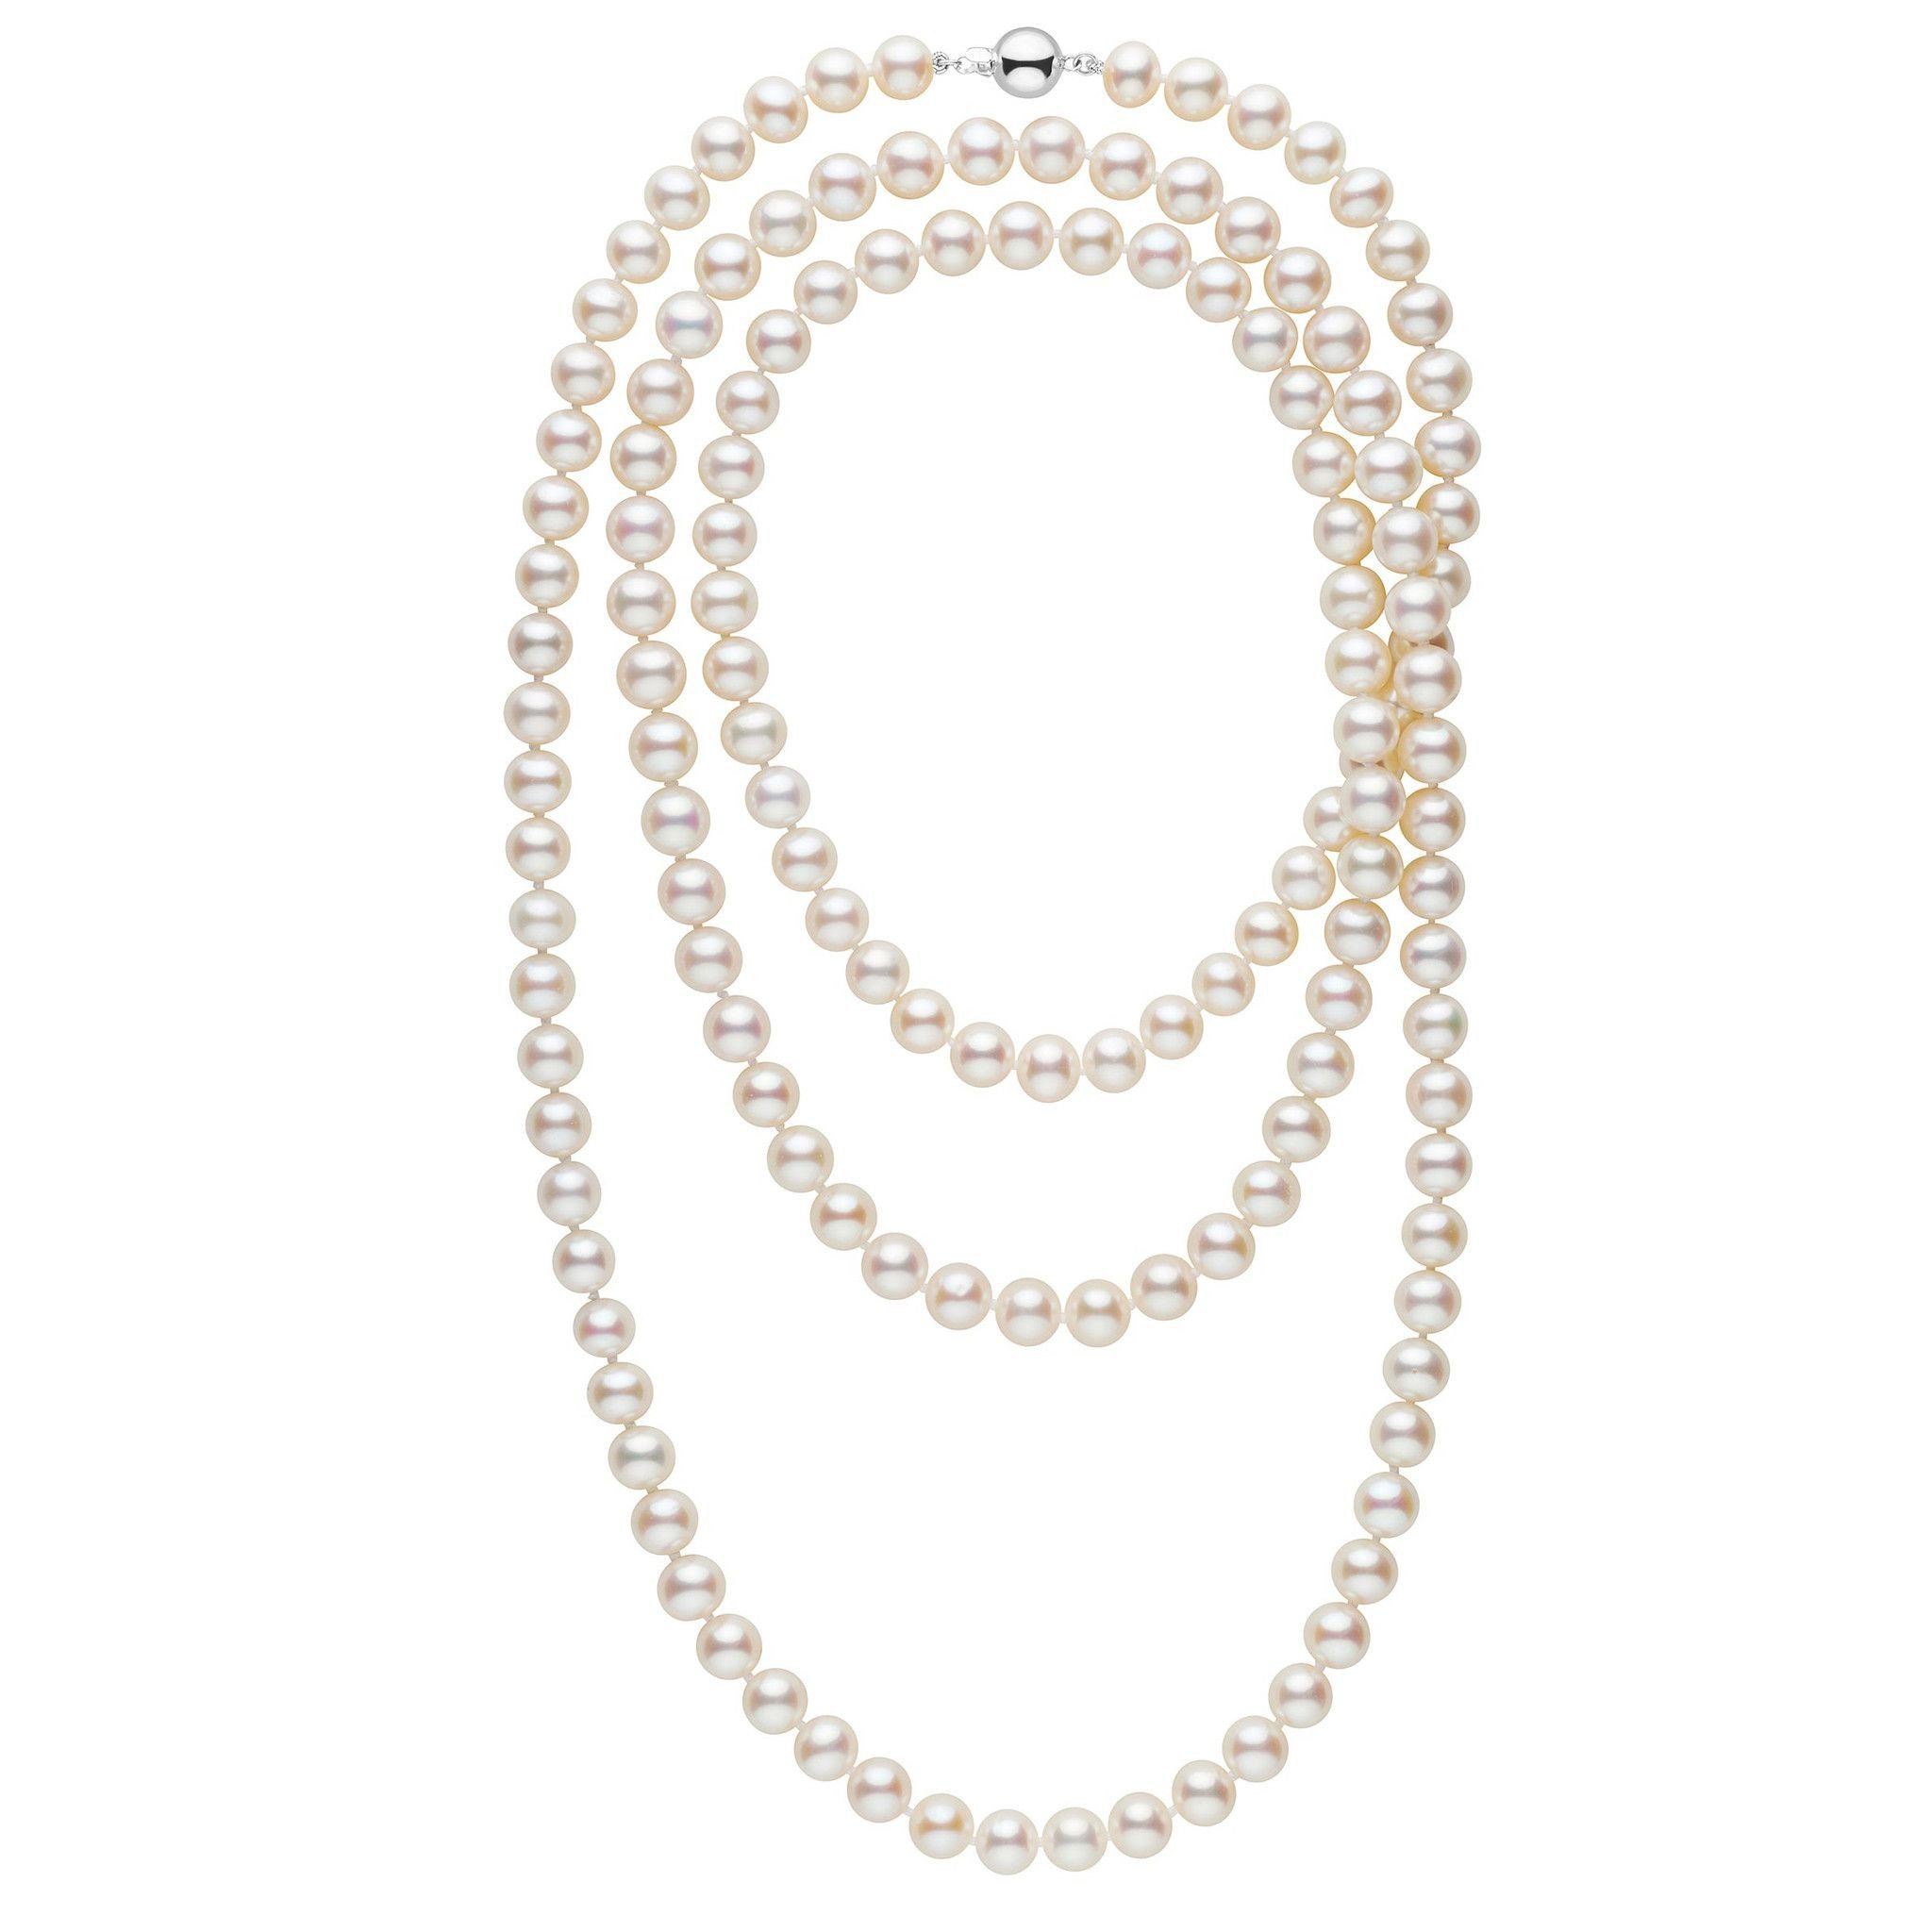 Illusion 30 inch Pearl Necklace - Multi-Strand Bridesmaid Jewelry in Freshwater White Color